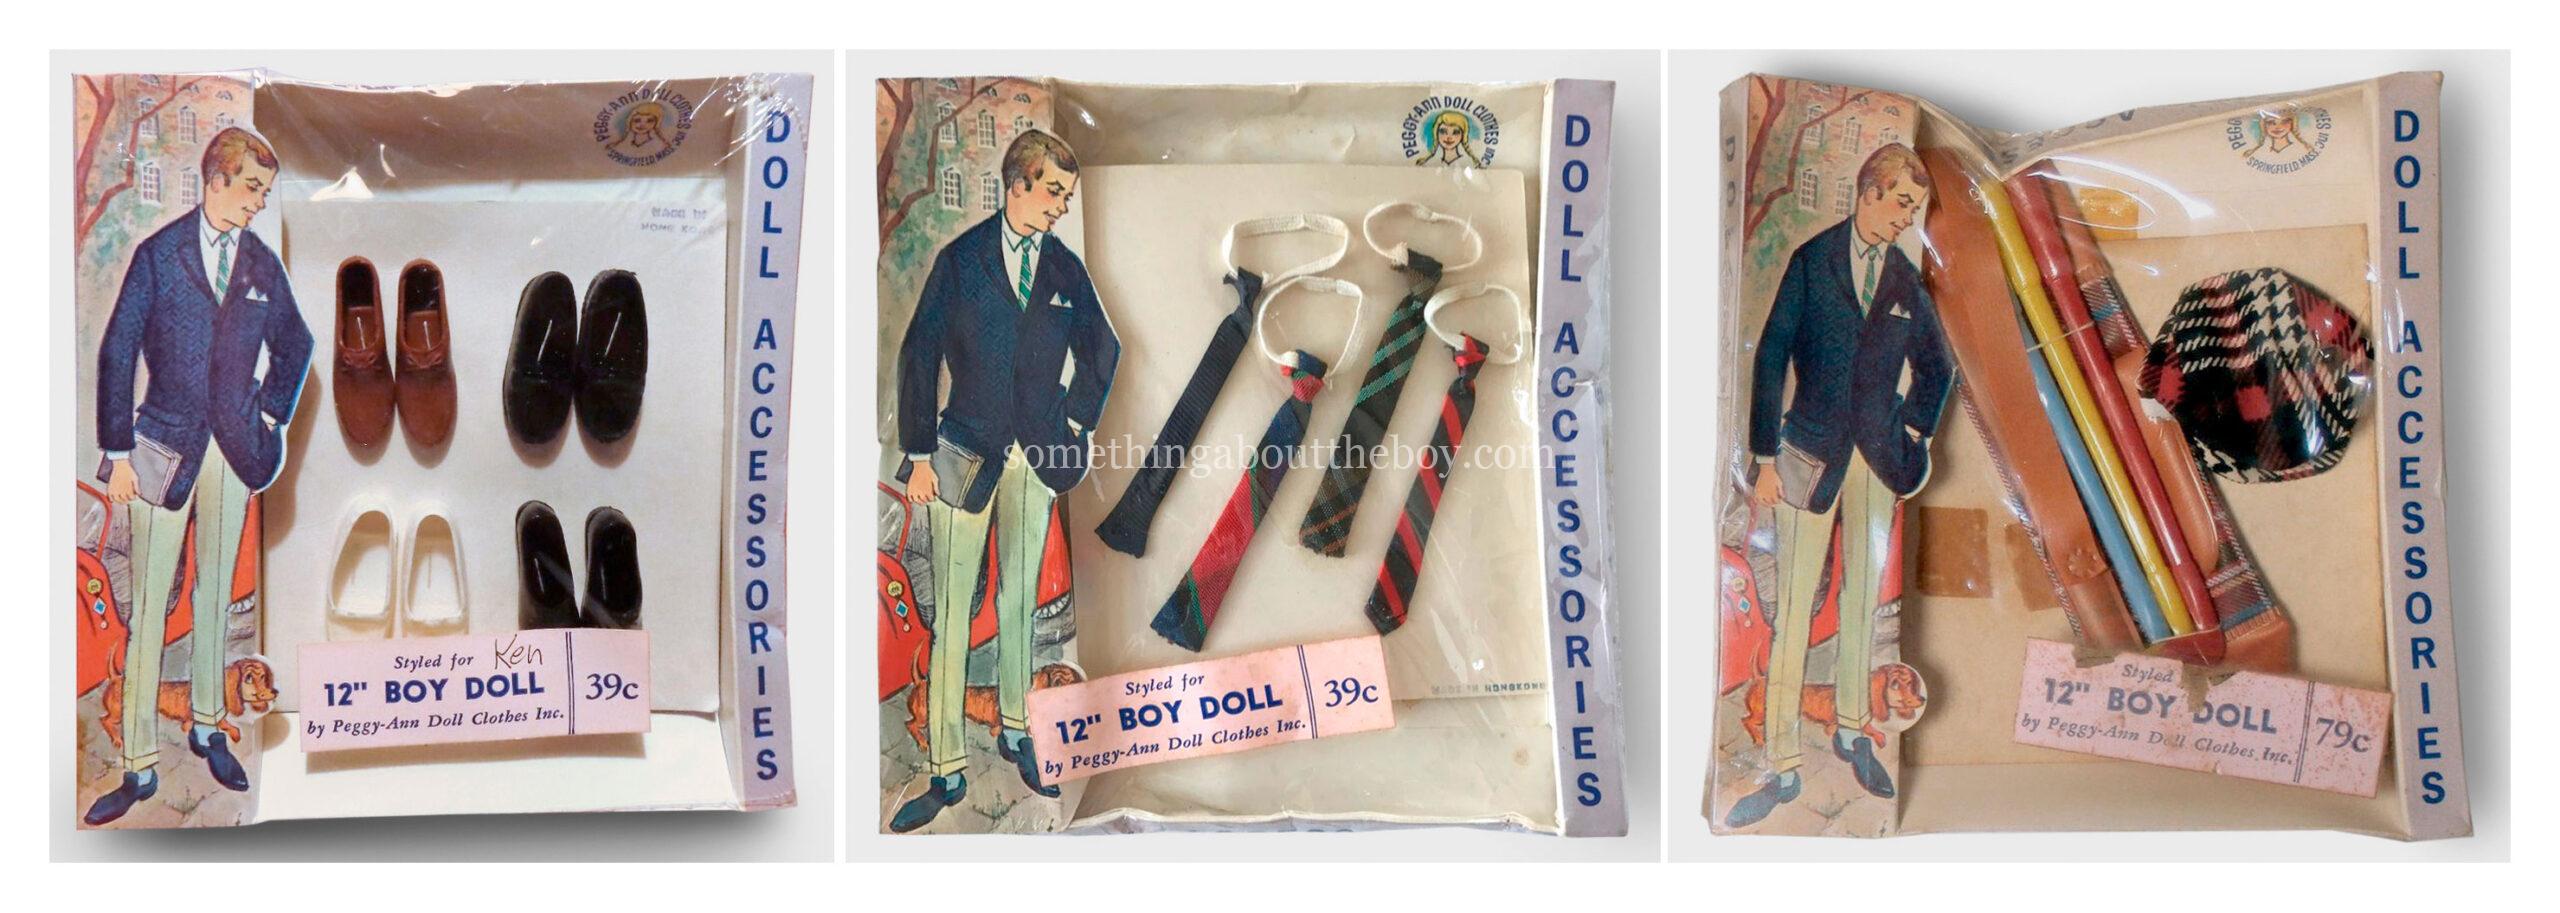 Boy Doll Accessories by Peggy-Ann Doll Clothes Inc.